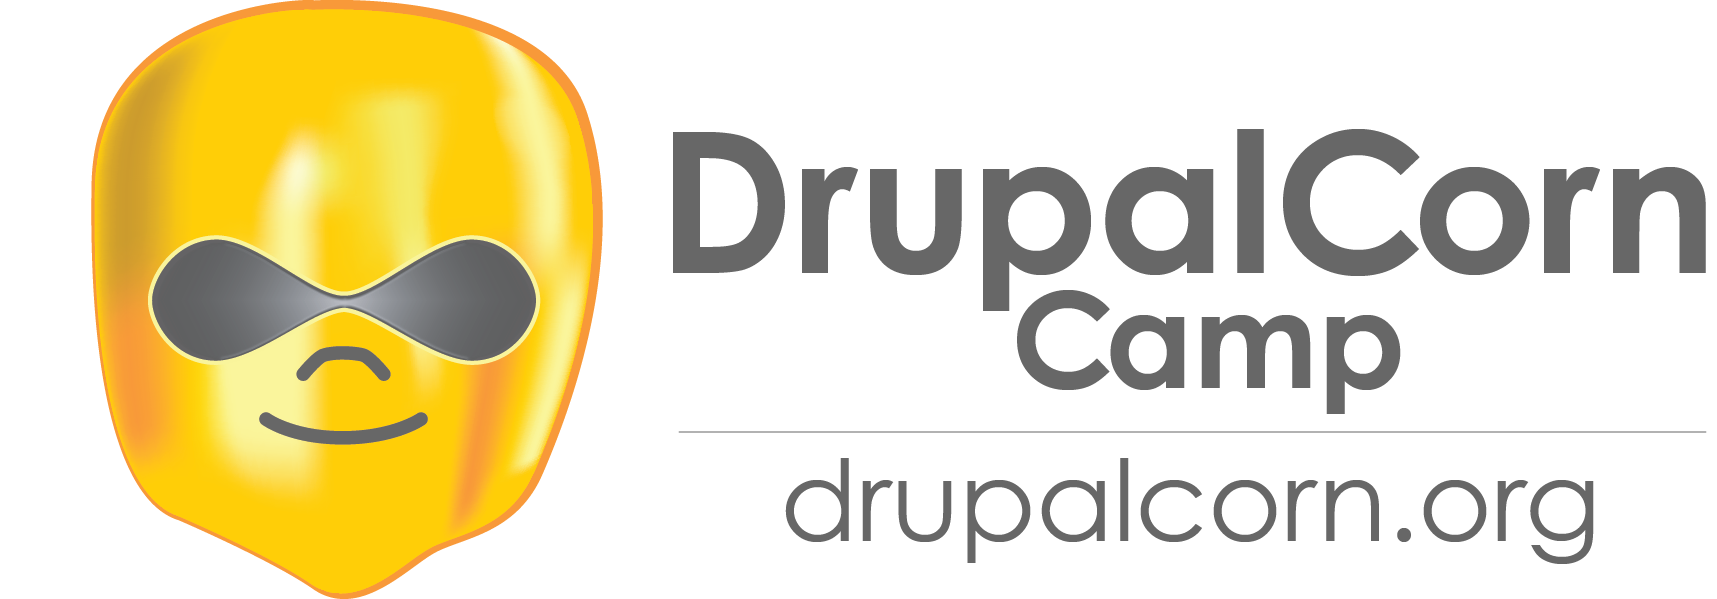 DrupalCorn Camp drupalcorn.org.